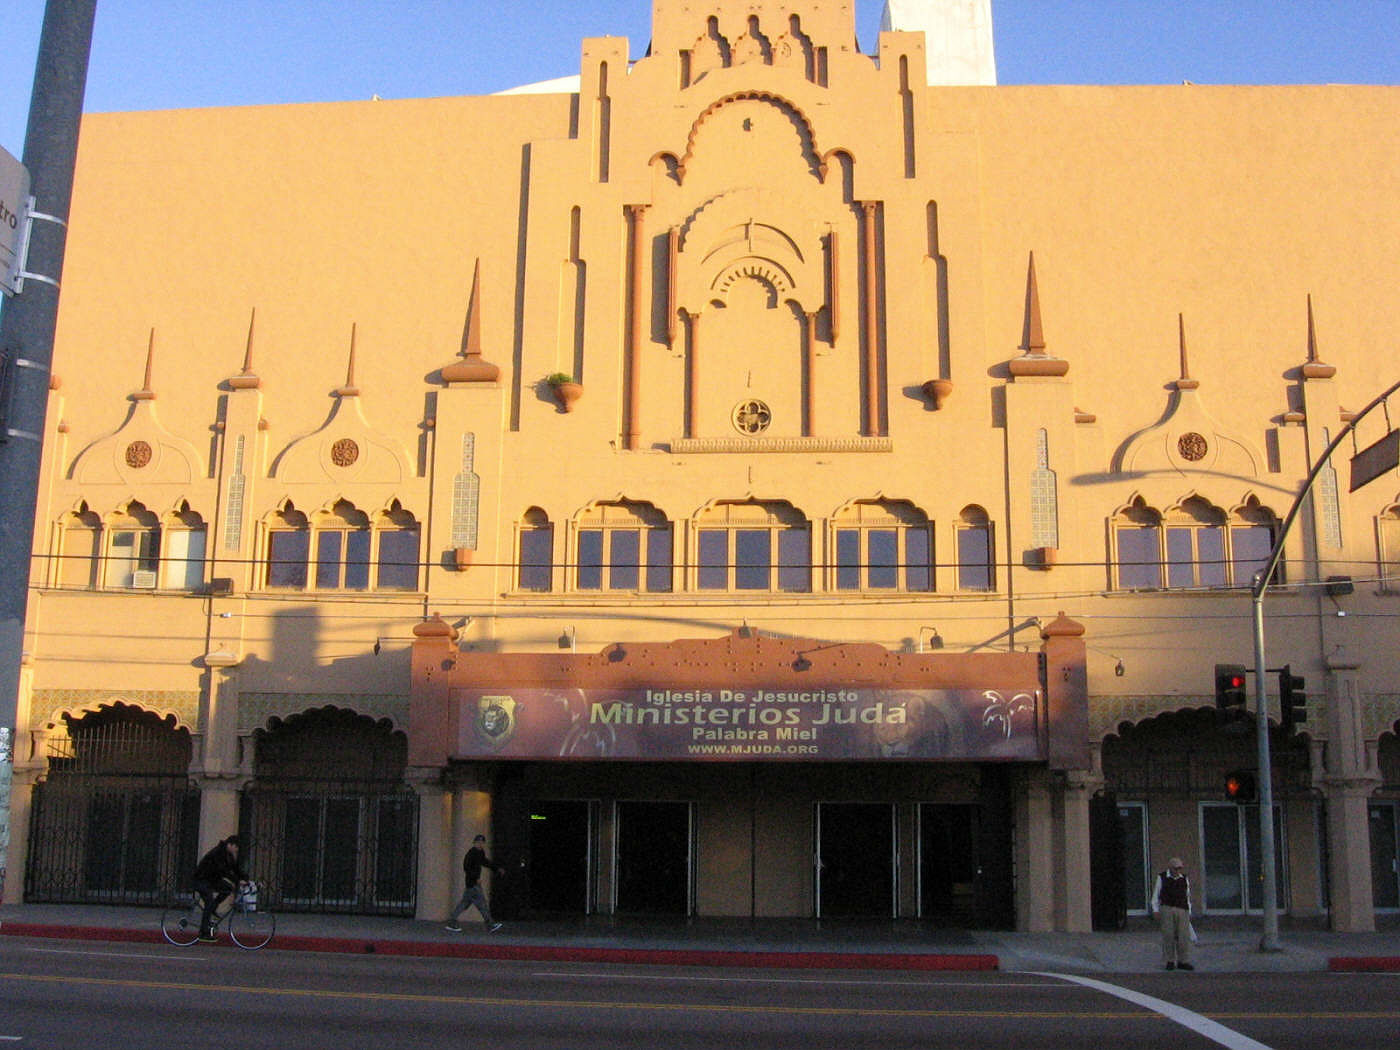 Los Angeles Theatres: Lincoln Theatre